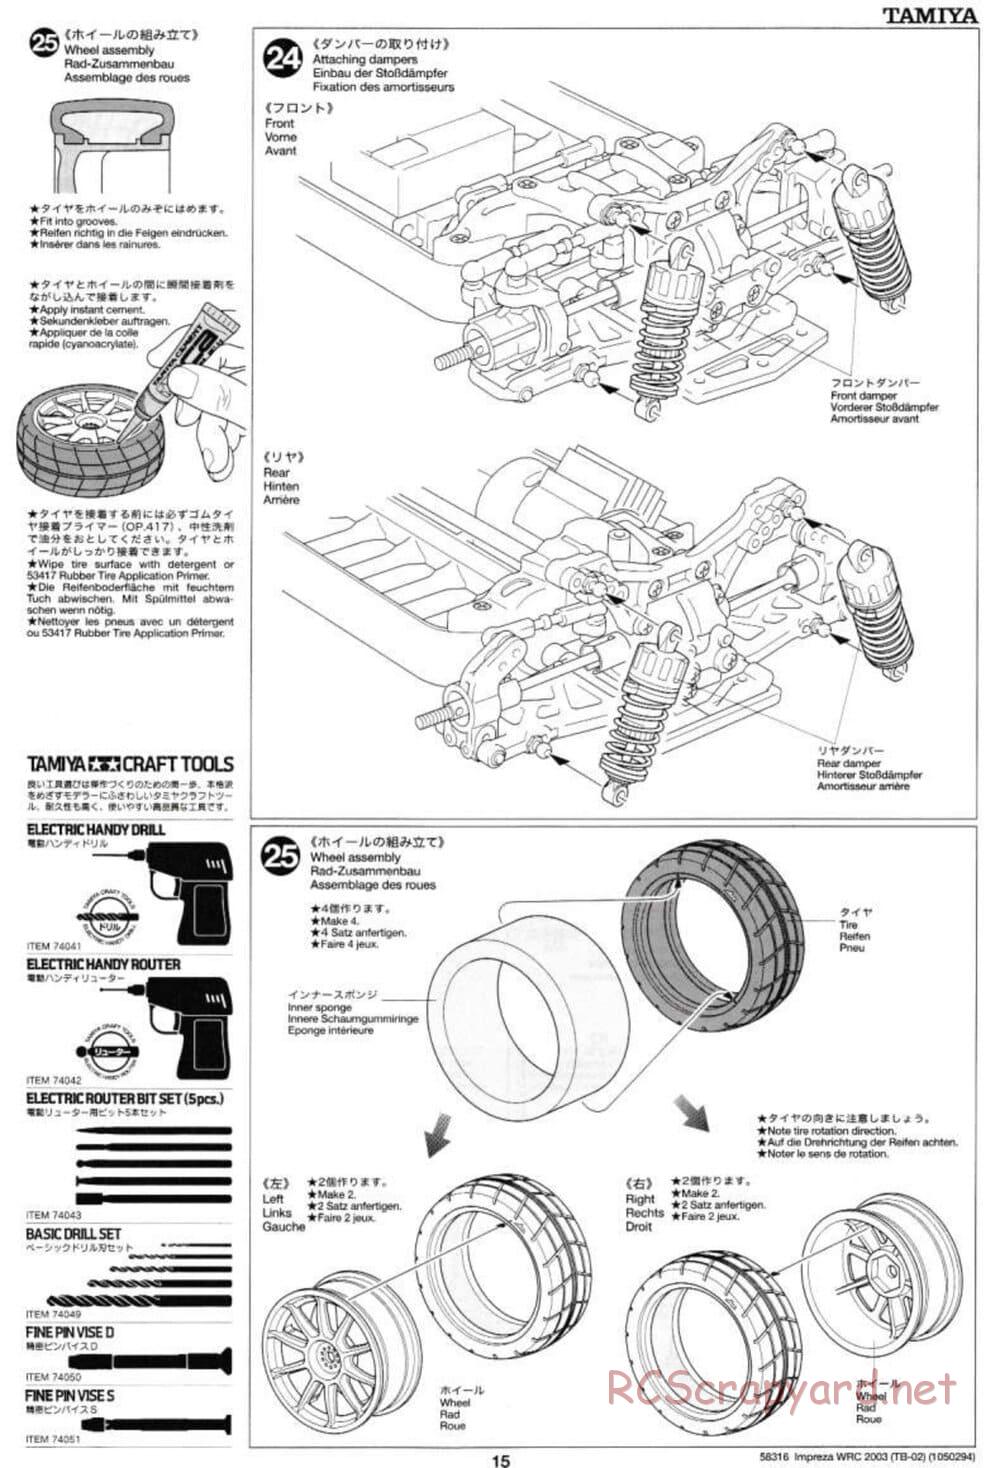 Tamiya - Subaru Impreza WRC 2003 - TB-02 Chassis - Manual - Page 15